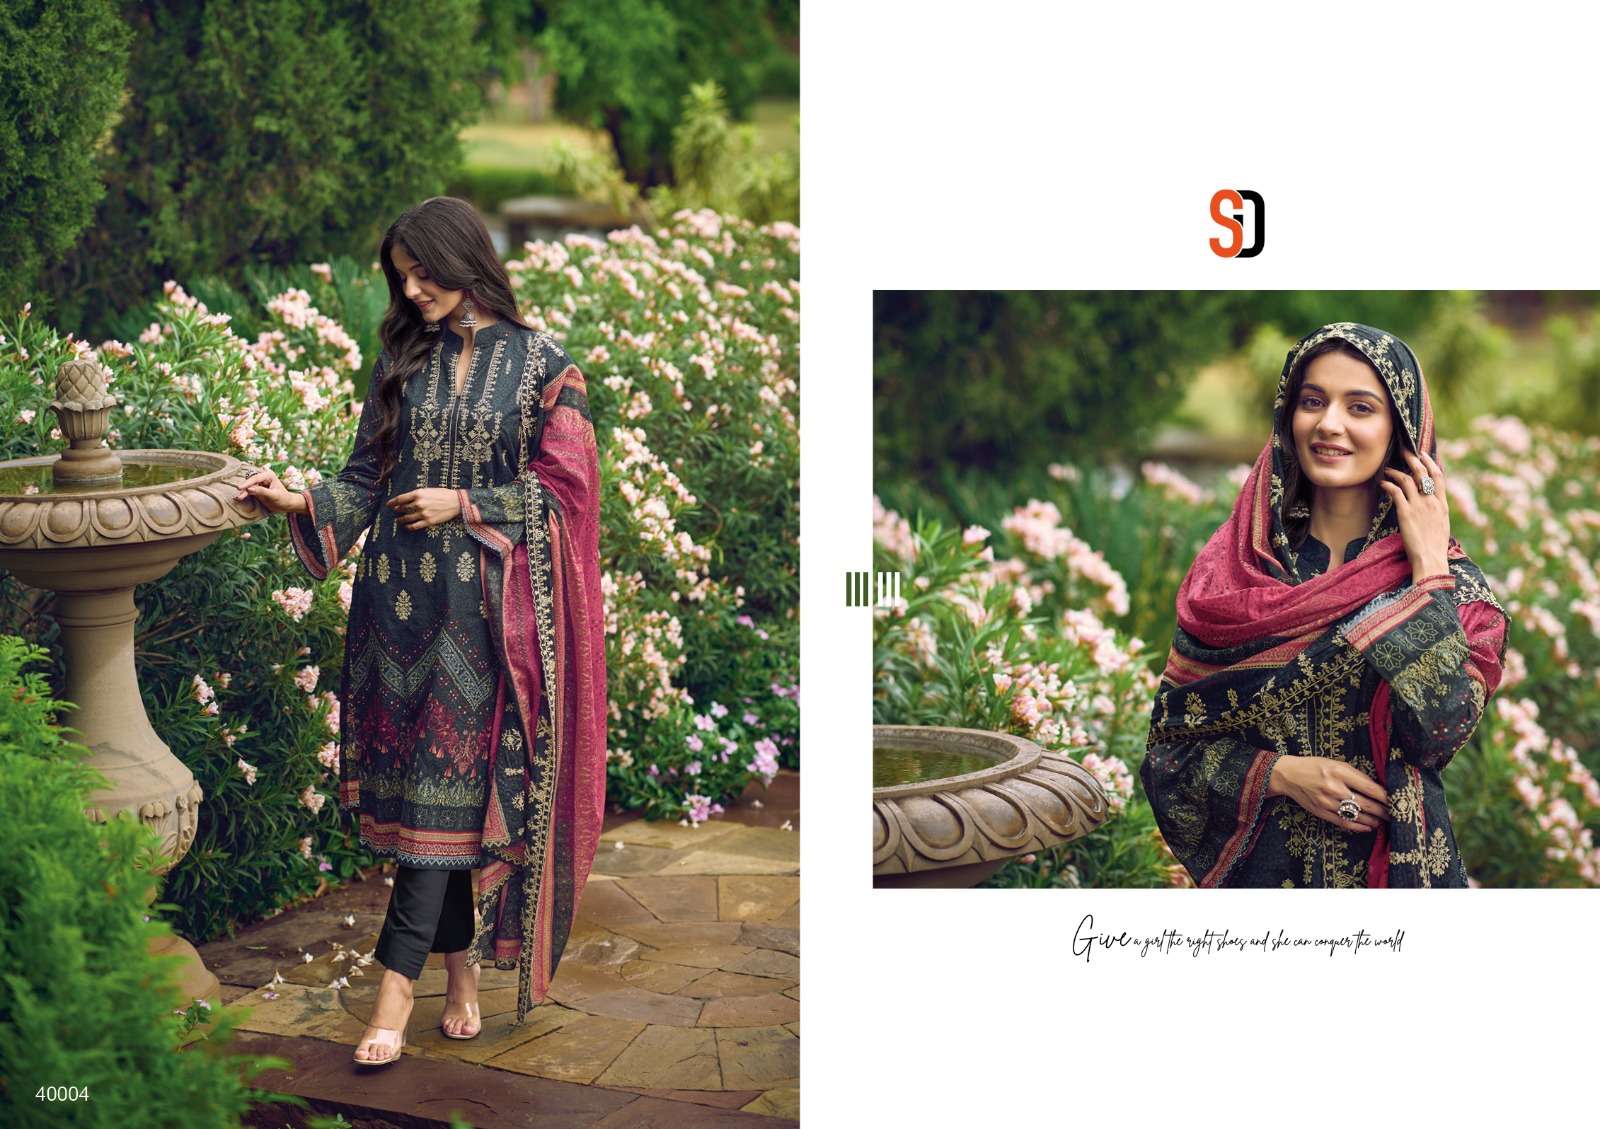 shraddha designer bin saeed vol-4 40001-40004 series readymade designer salwar suits catalogue surat